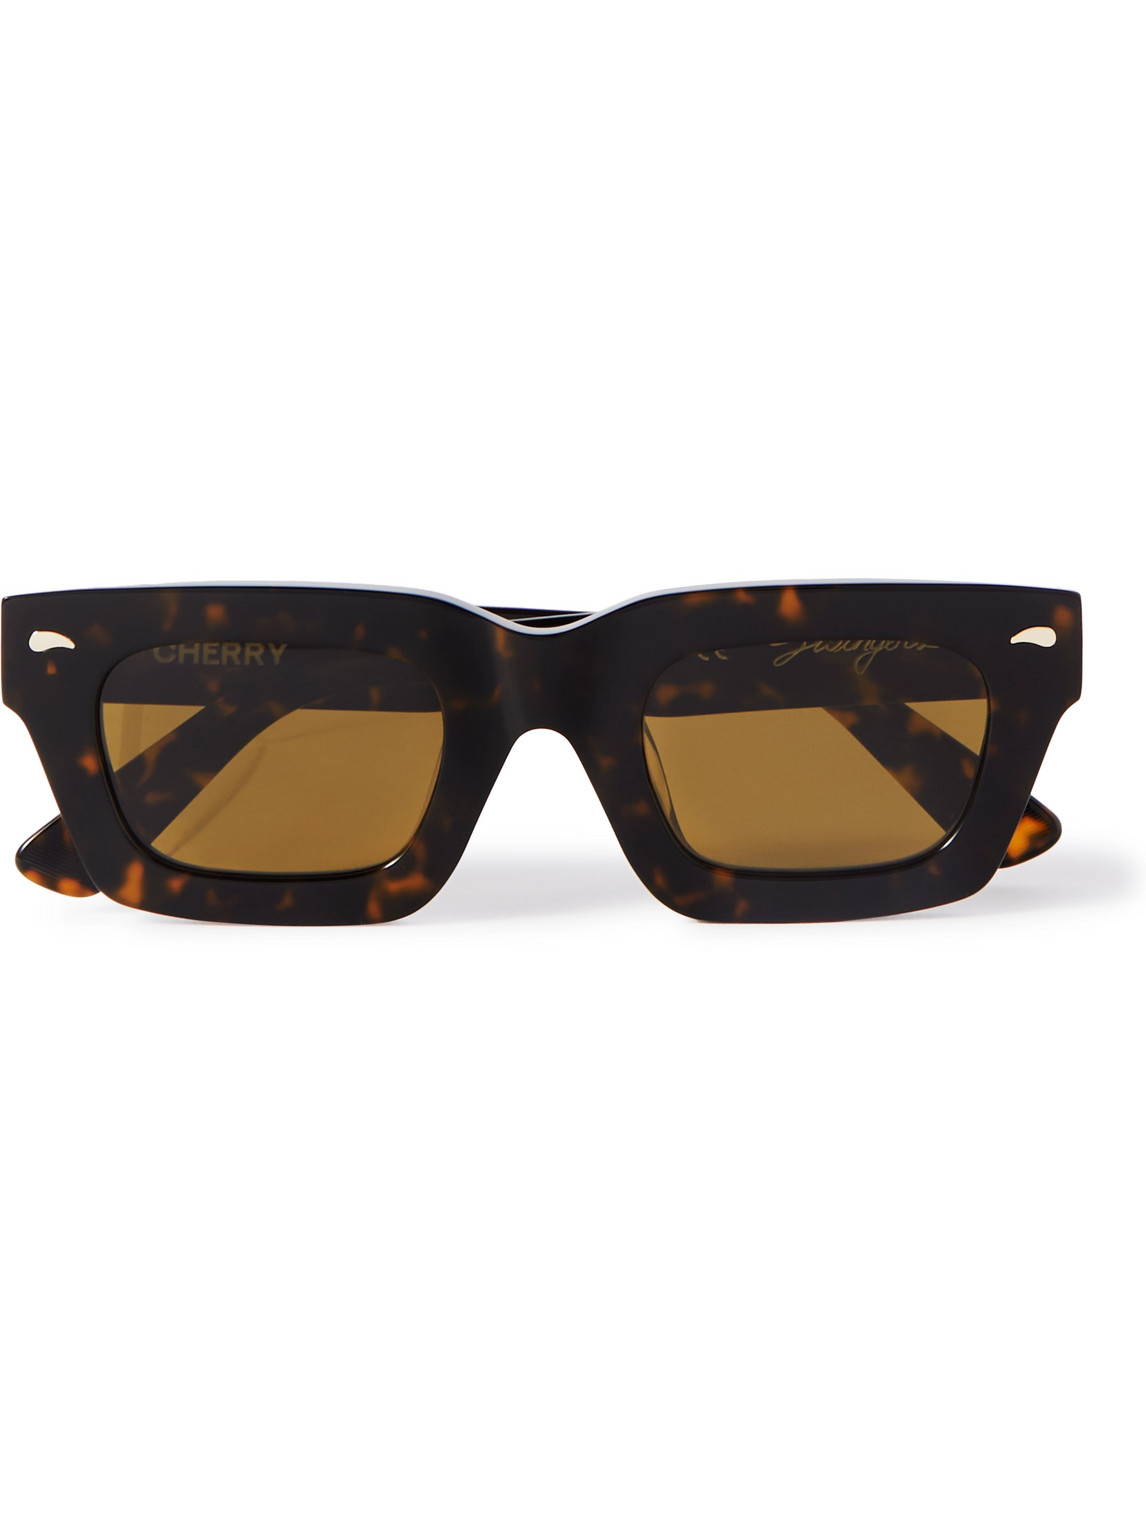 Cherry La Swingers D-frame Tortoiseshell Acetate Sunglasses